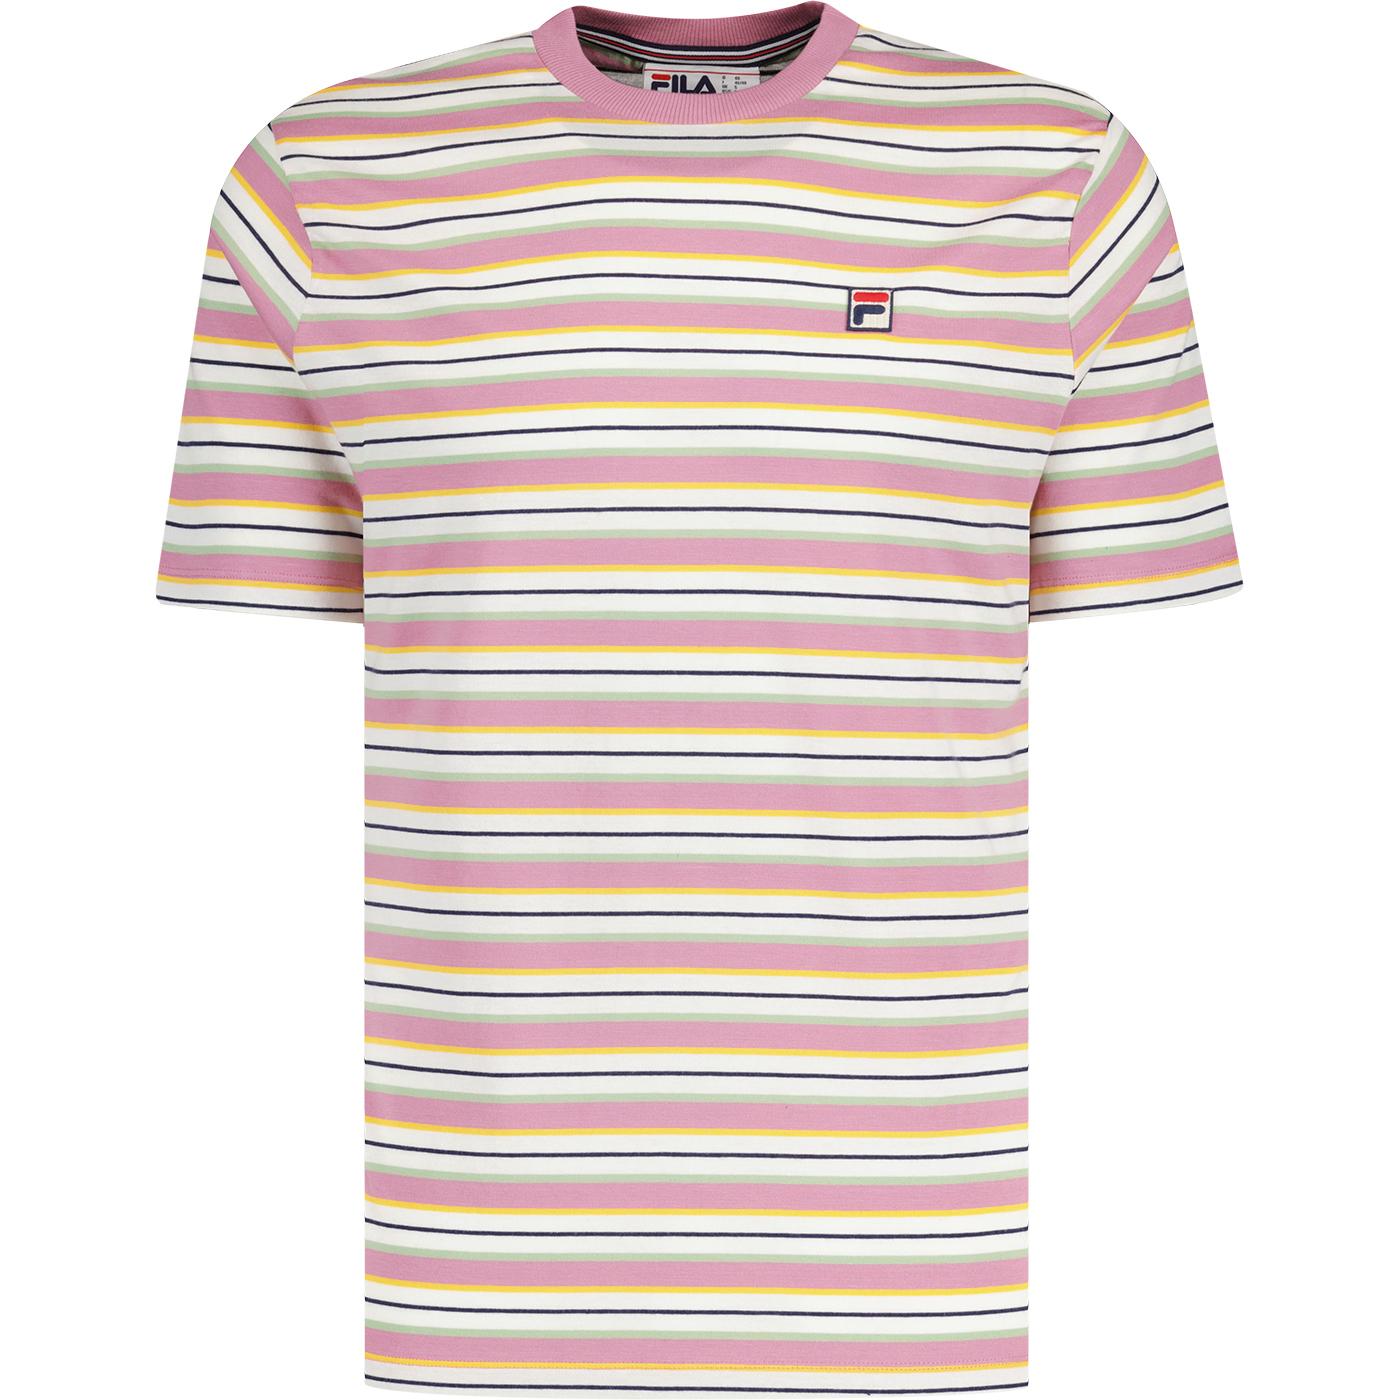 Zar Fila Vintage Yarn Dye Retro Striped T-Shirt